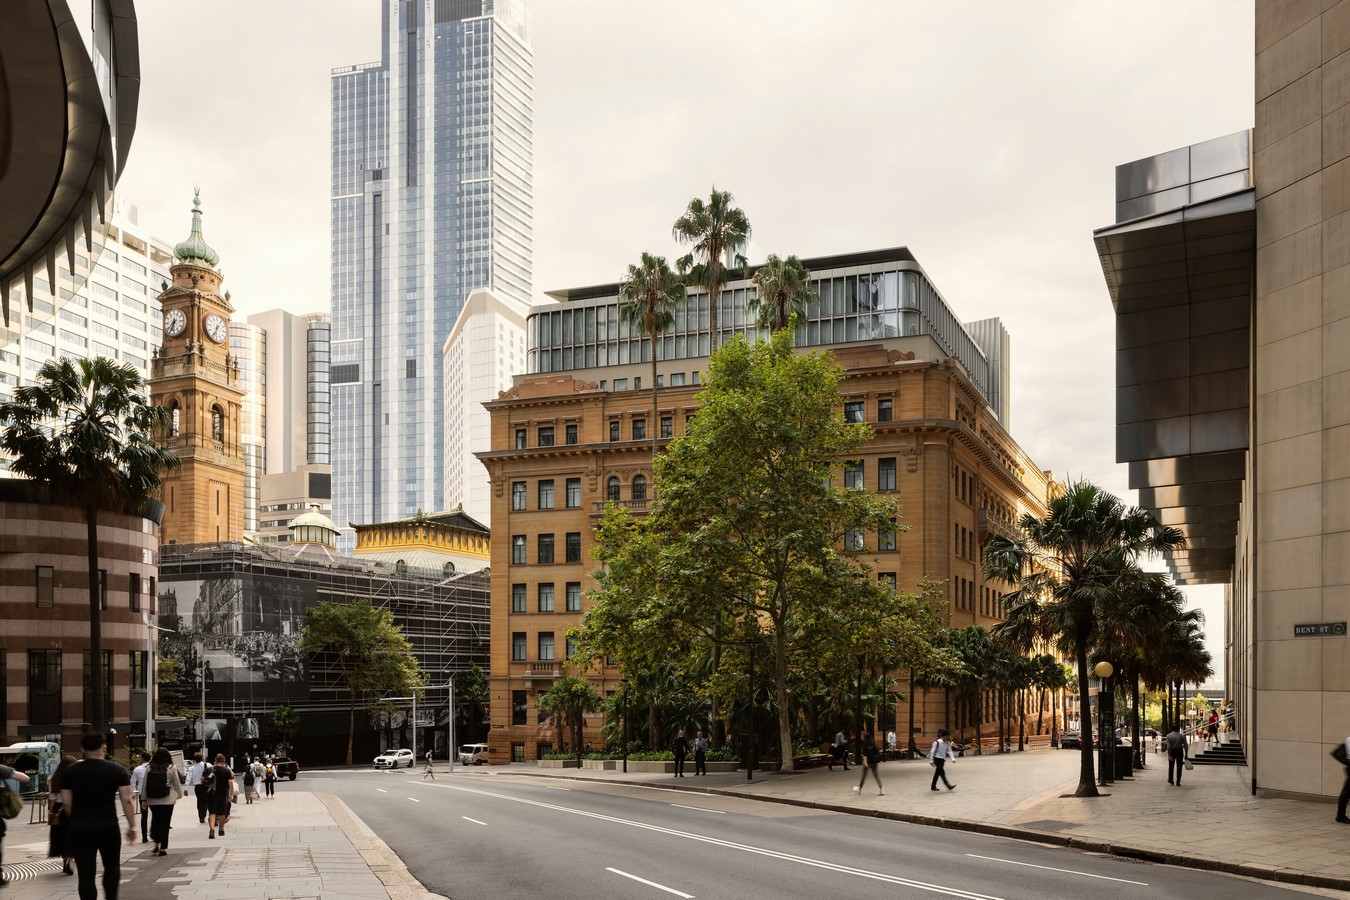 Capella Sydney Hotel by Make Architects - Sheet4